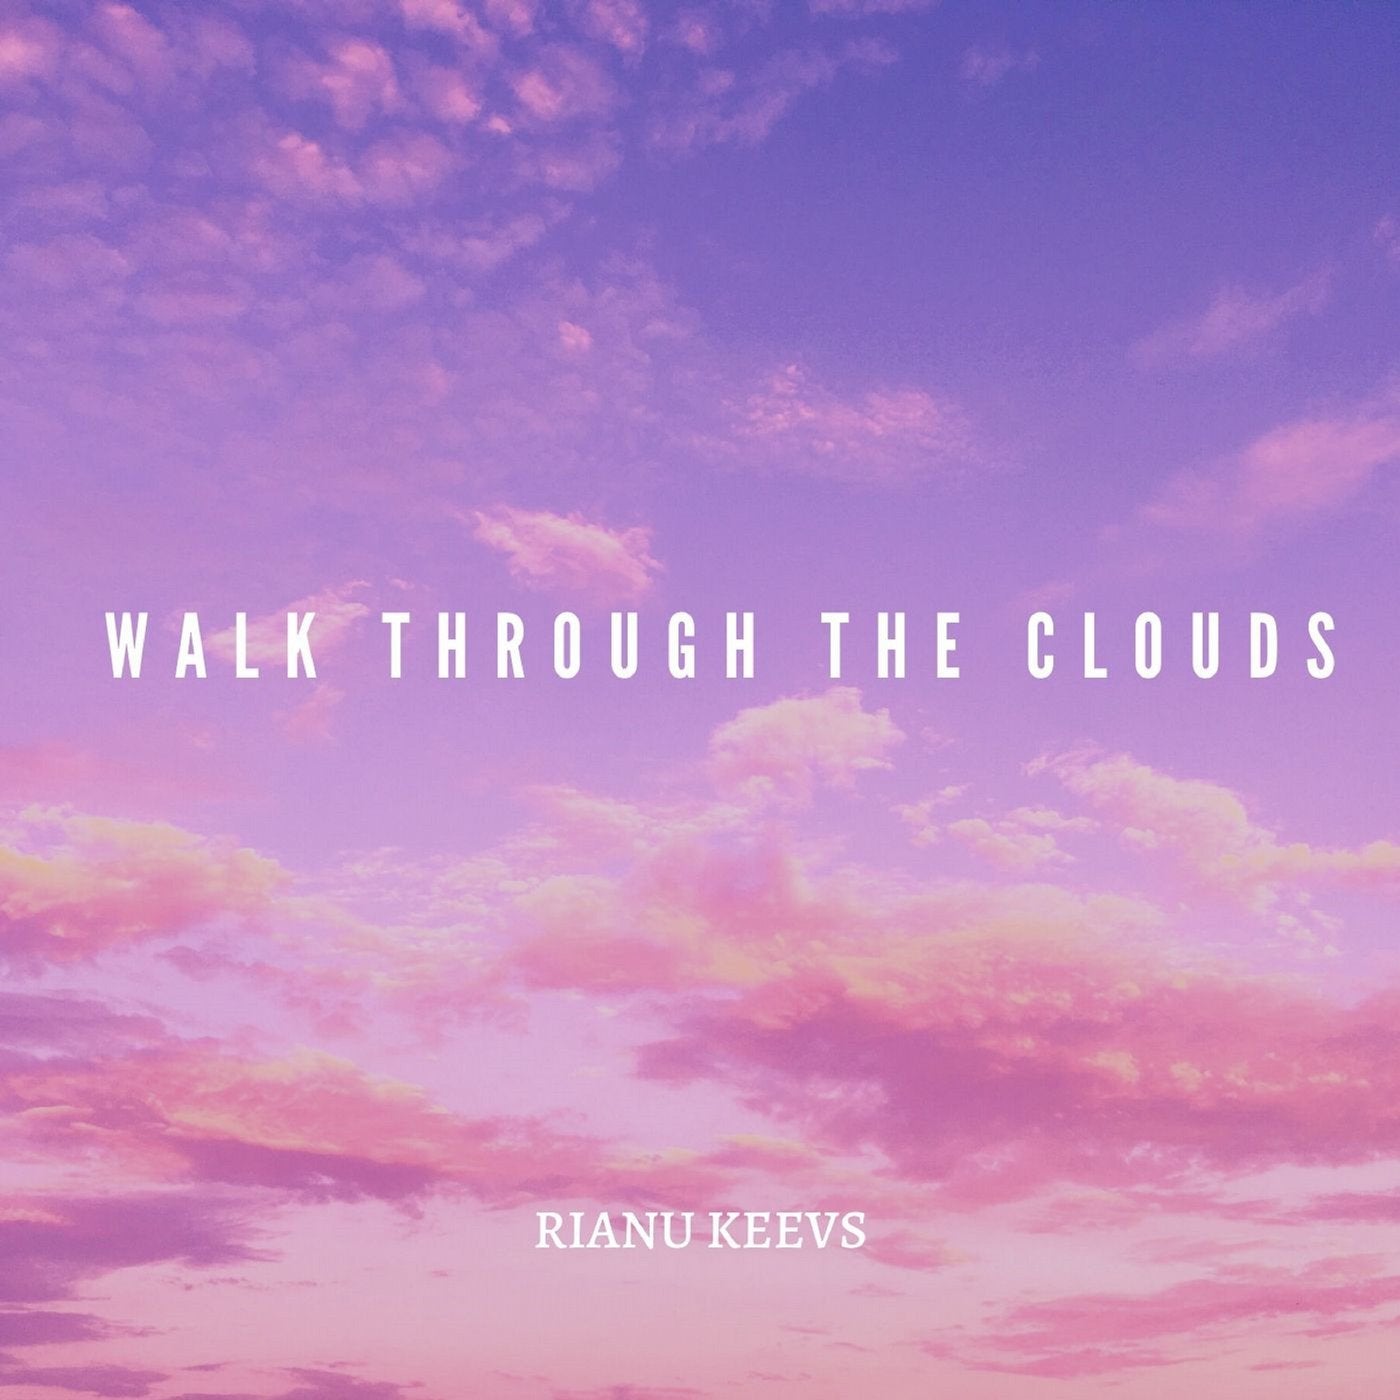 Walk through the clouds